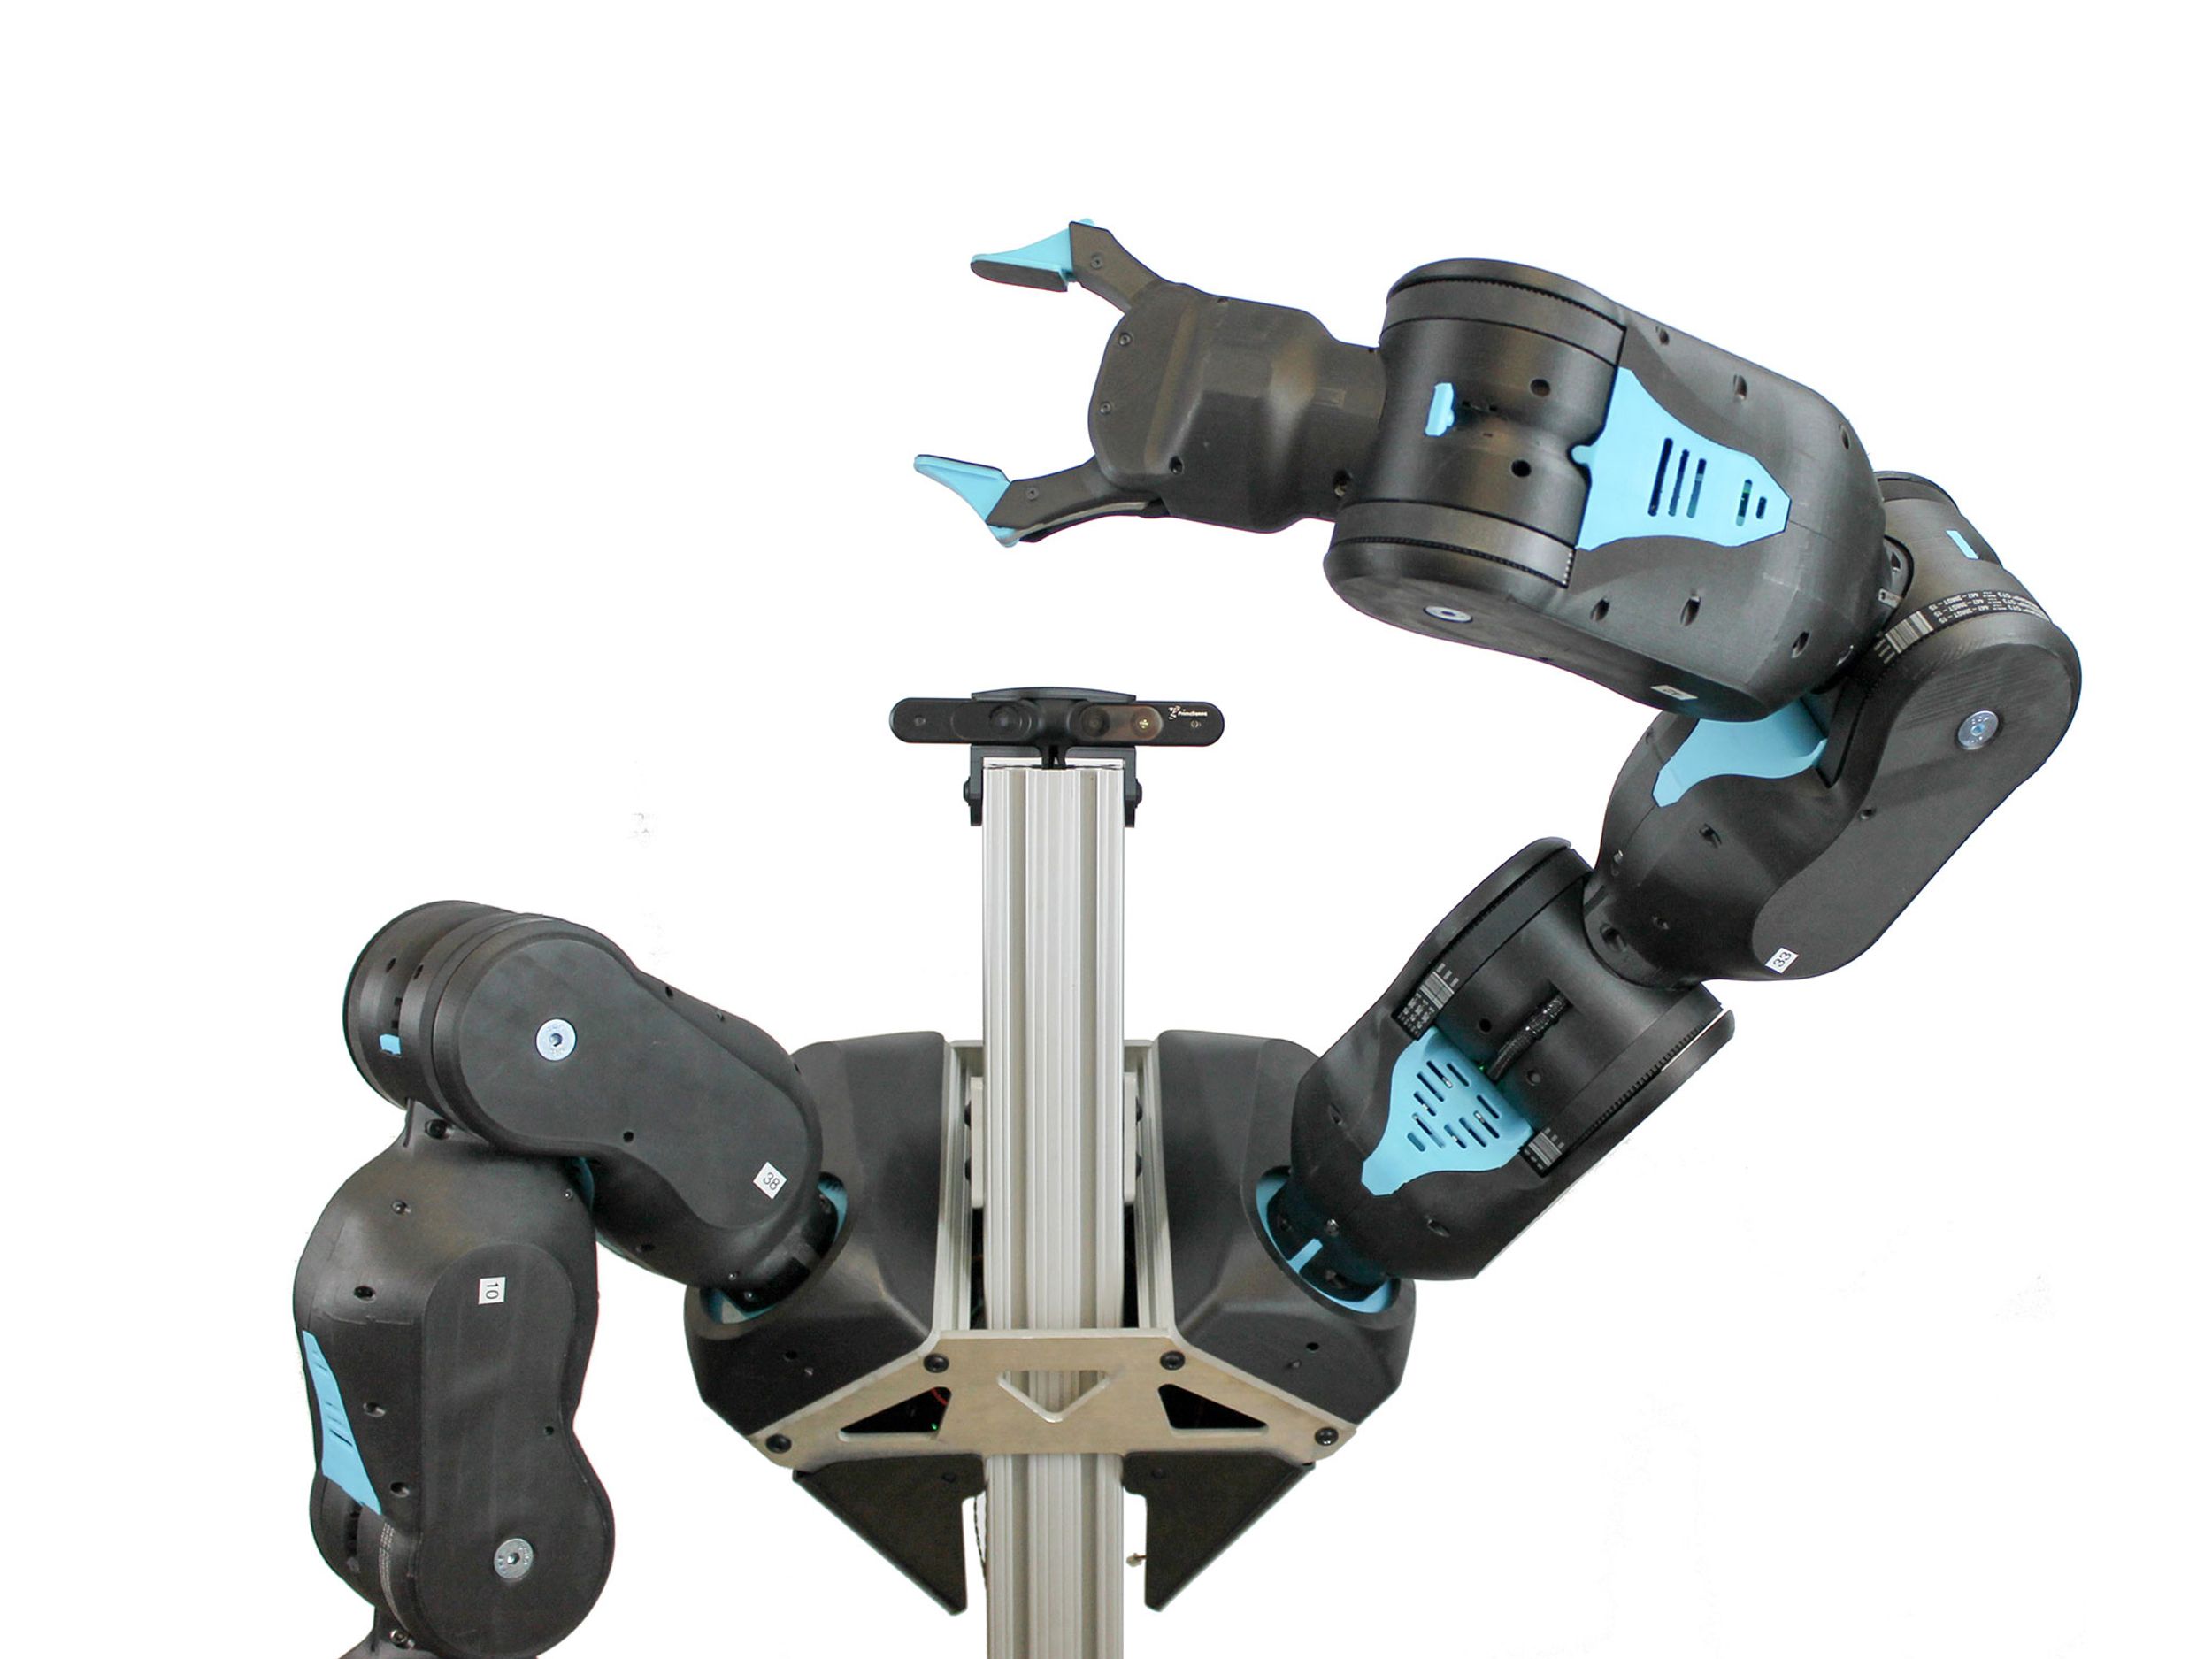 UC Berkeley Blue robot arm